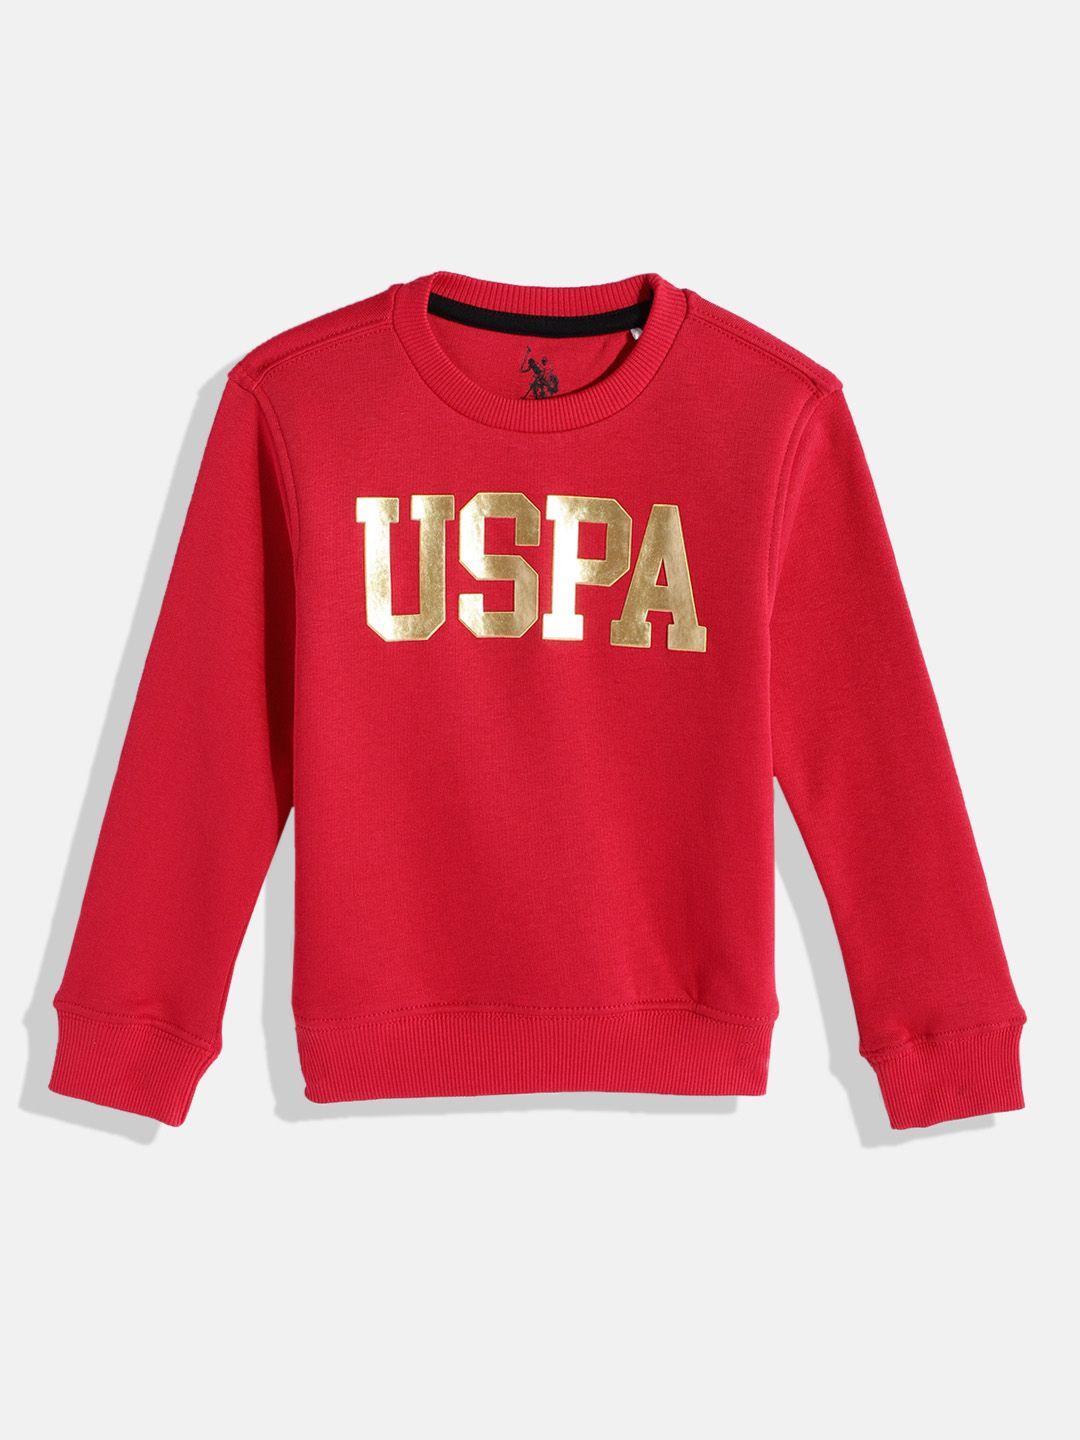 u.s. polo assn. kids boys brand logo printed sweatshirt